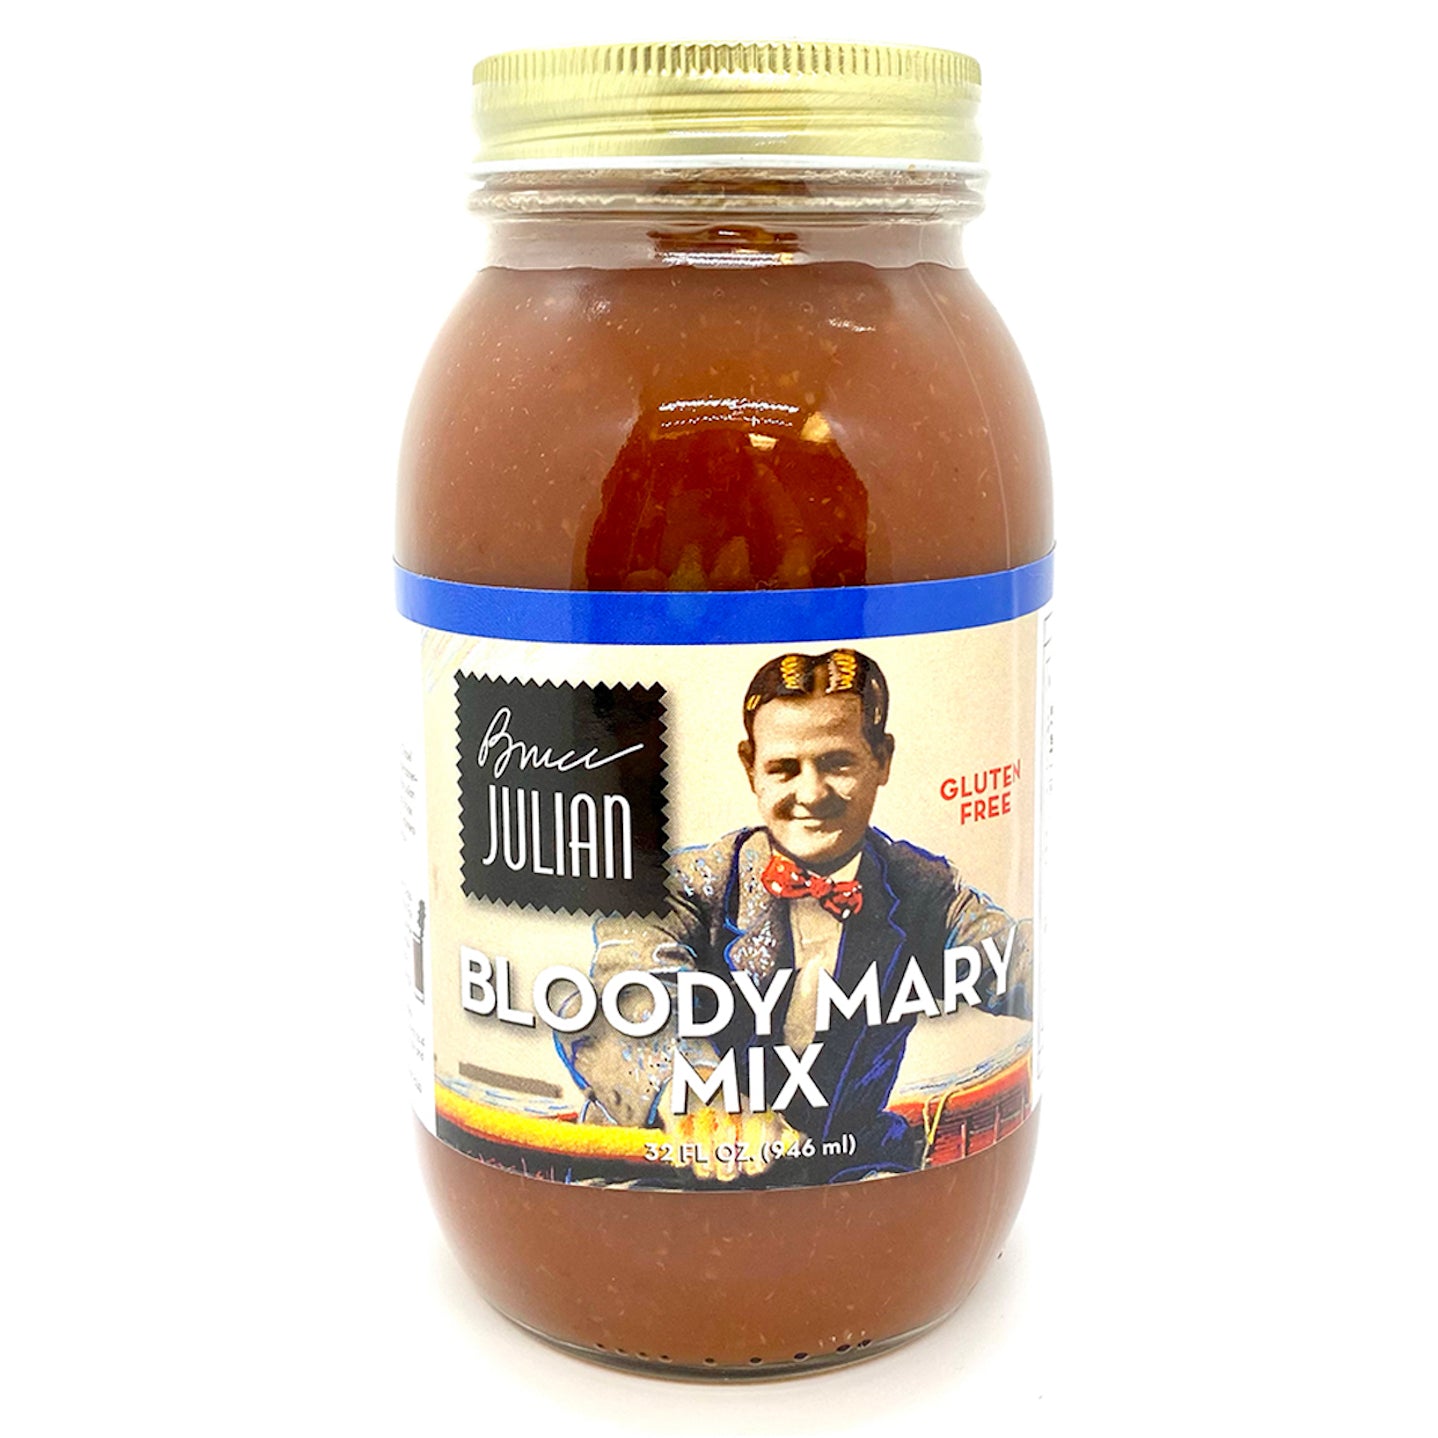 Bruce Julian Classic Bloody Mary Mix